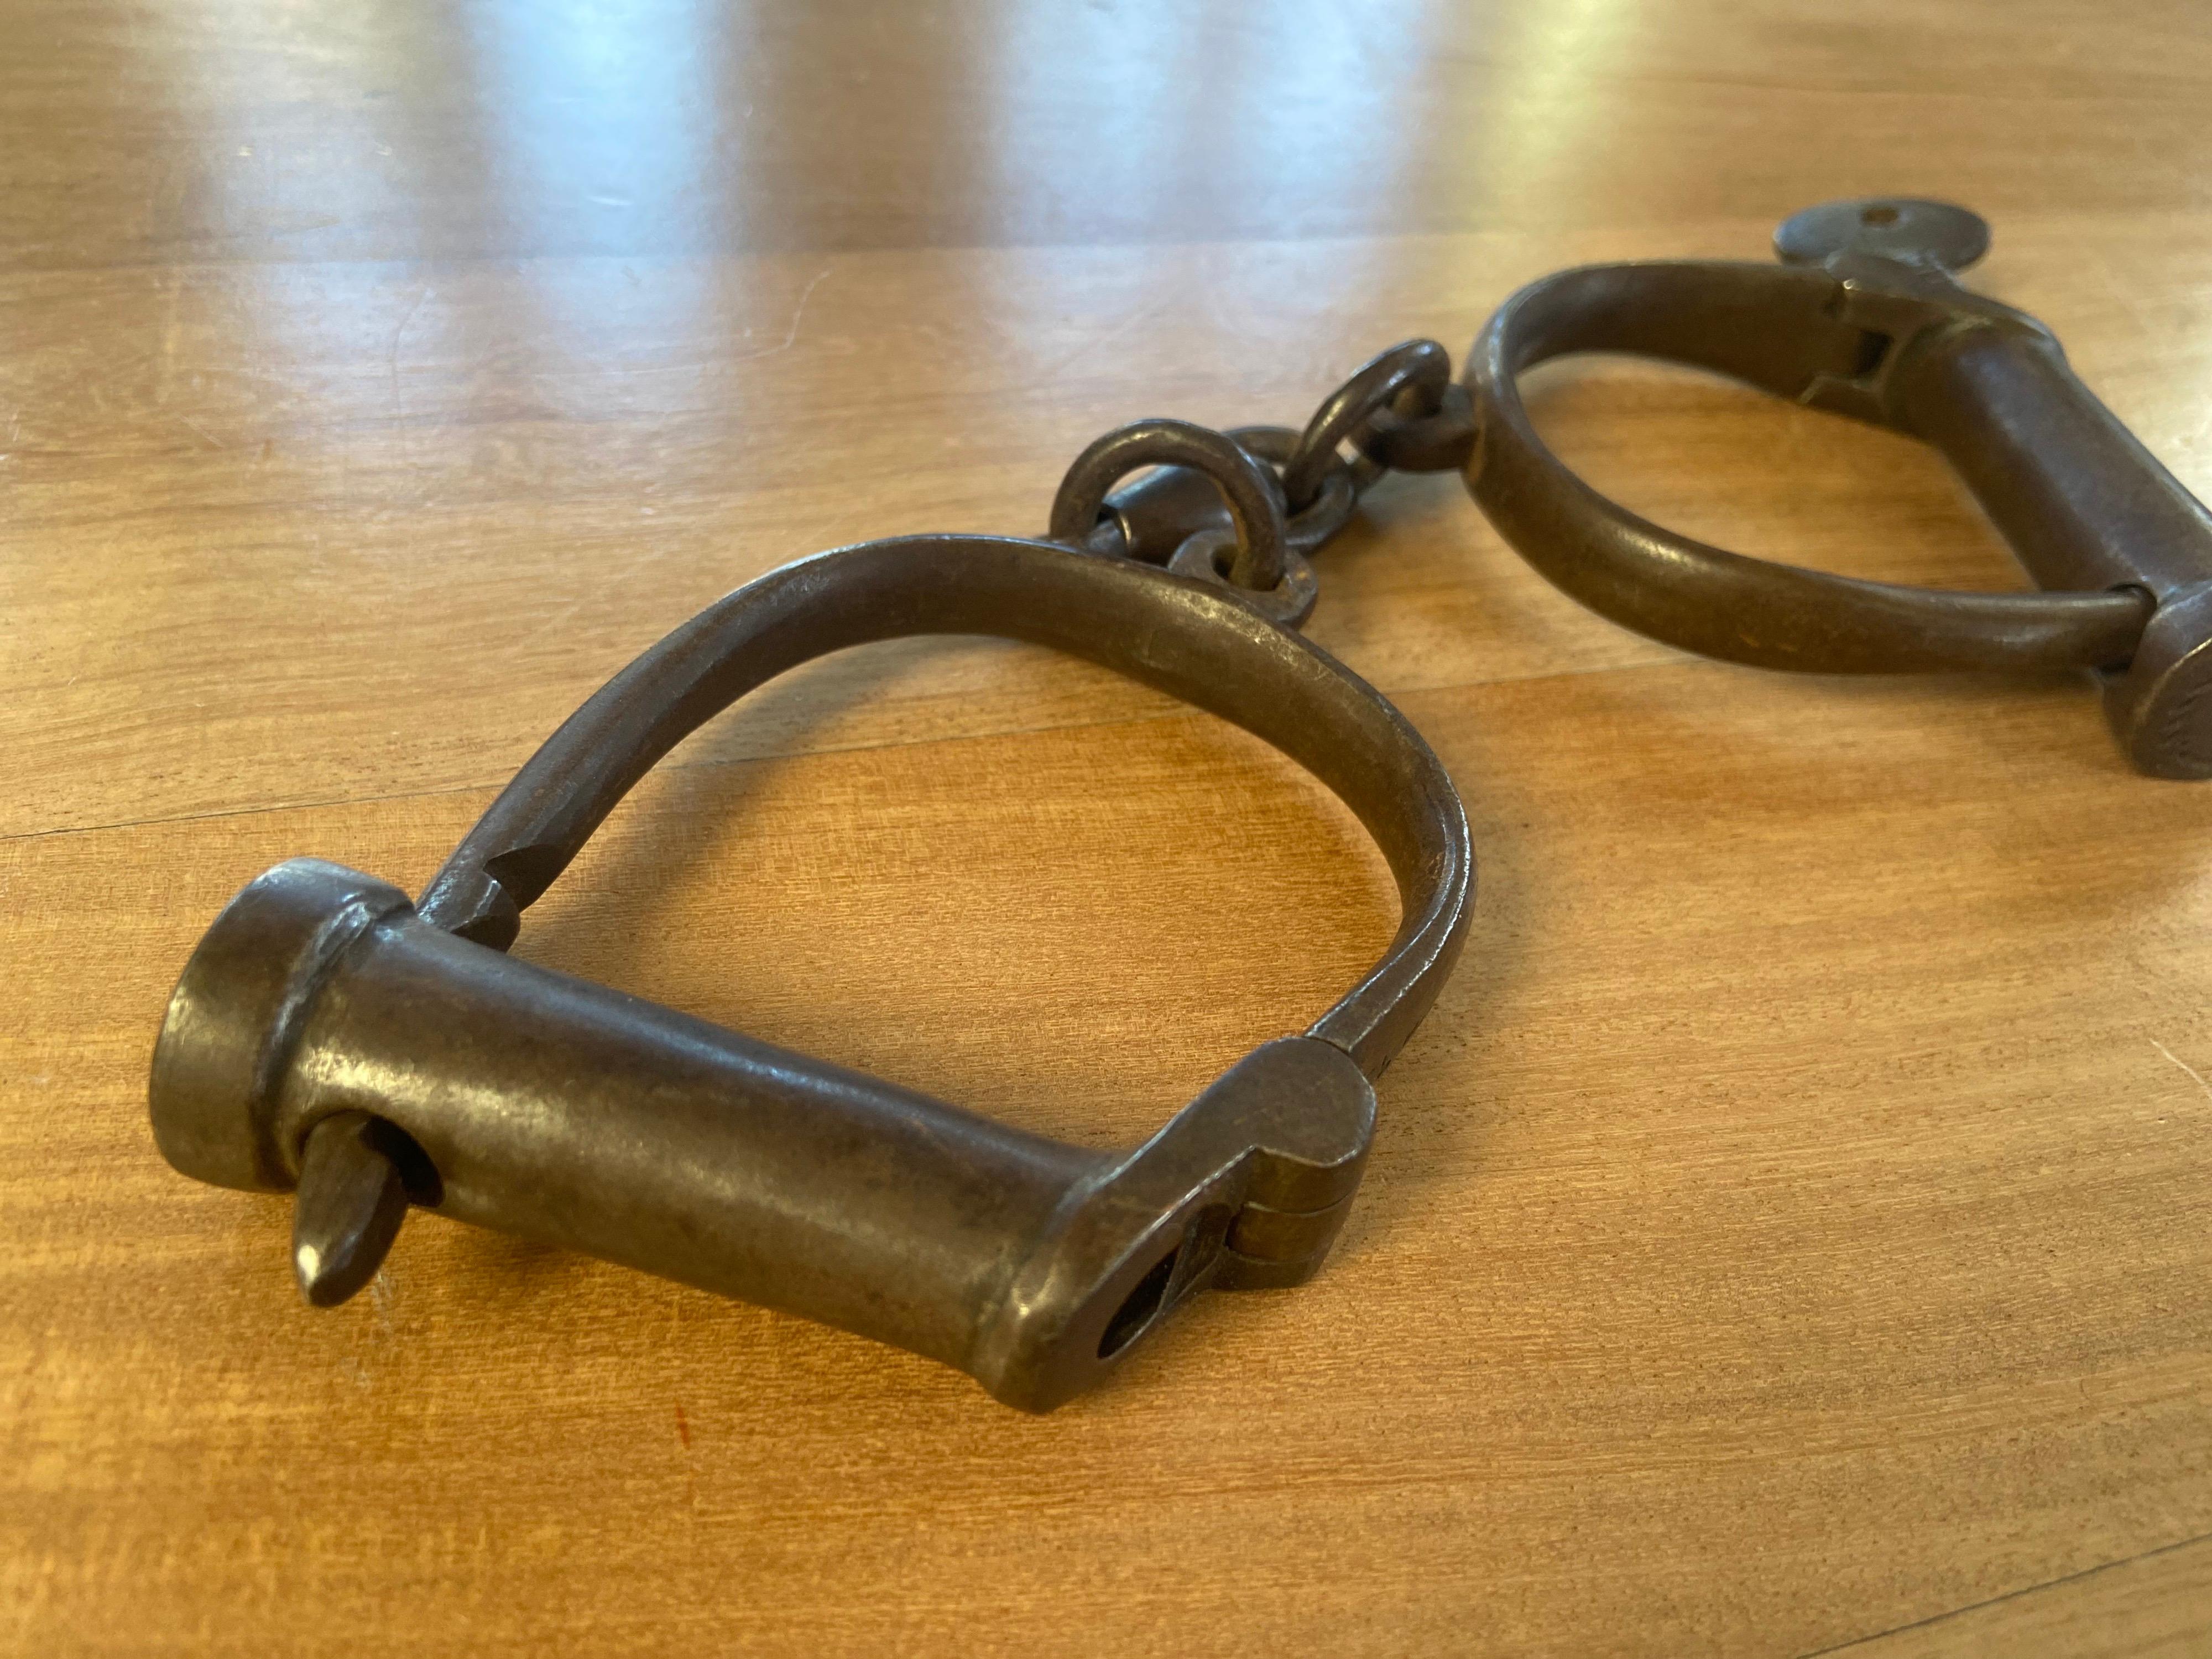 19th century handcuffs